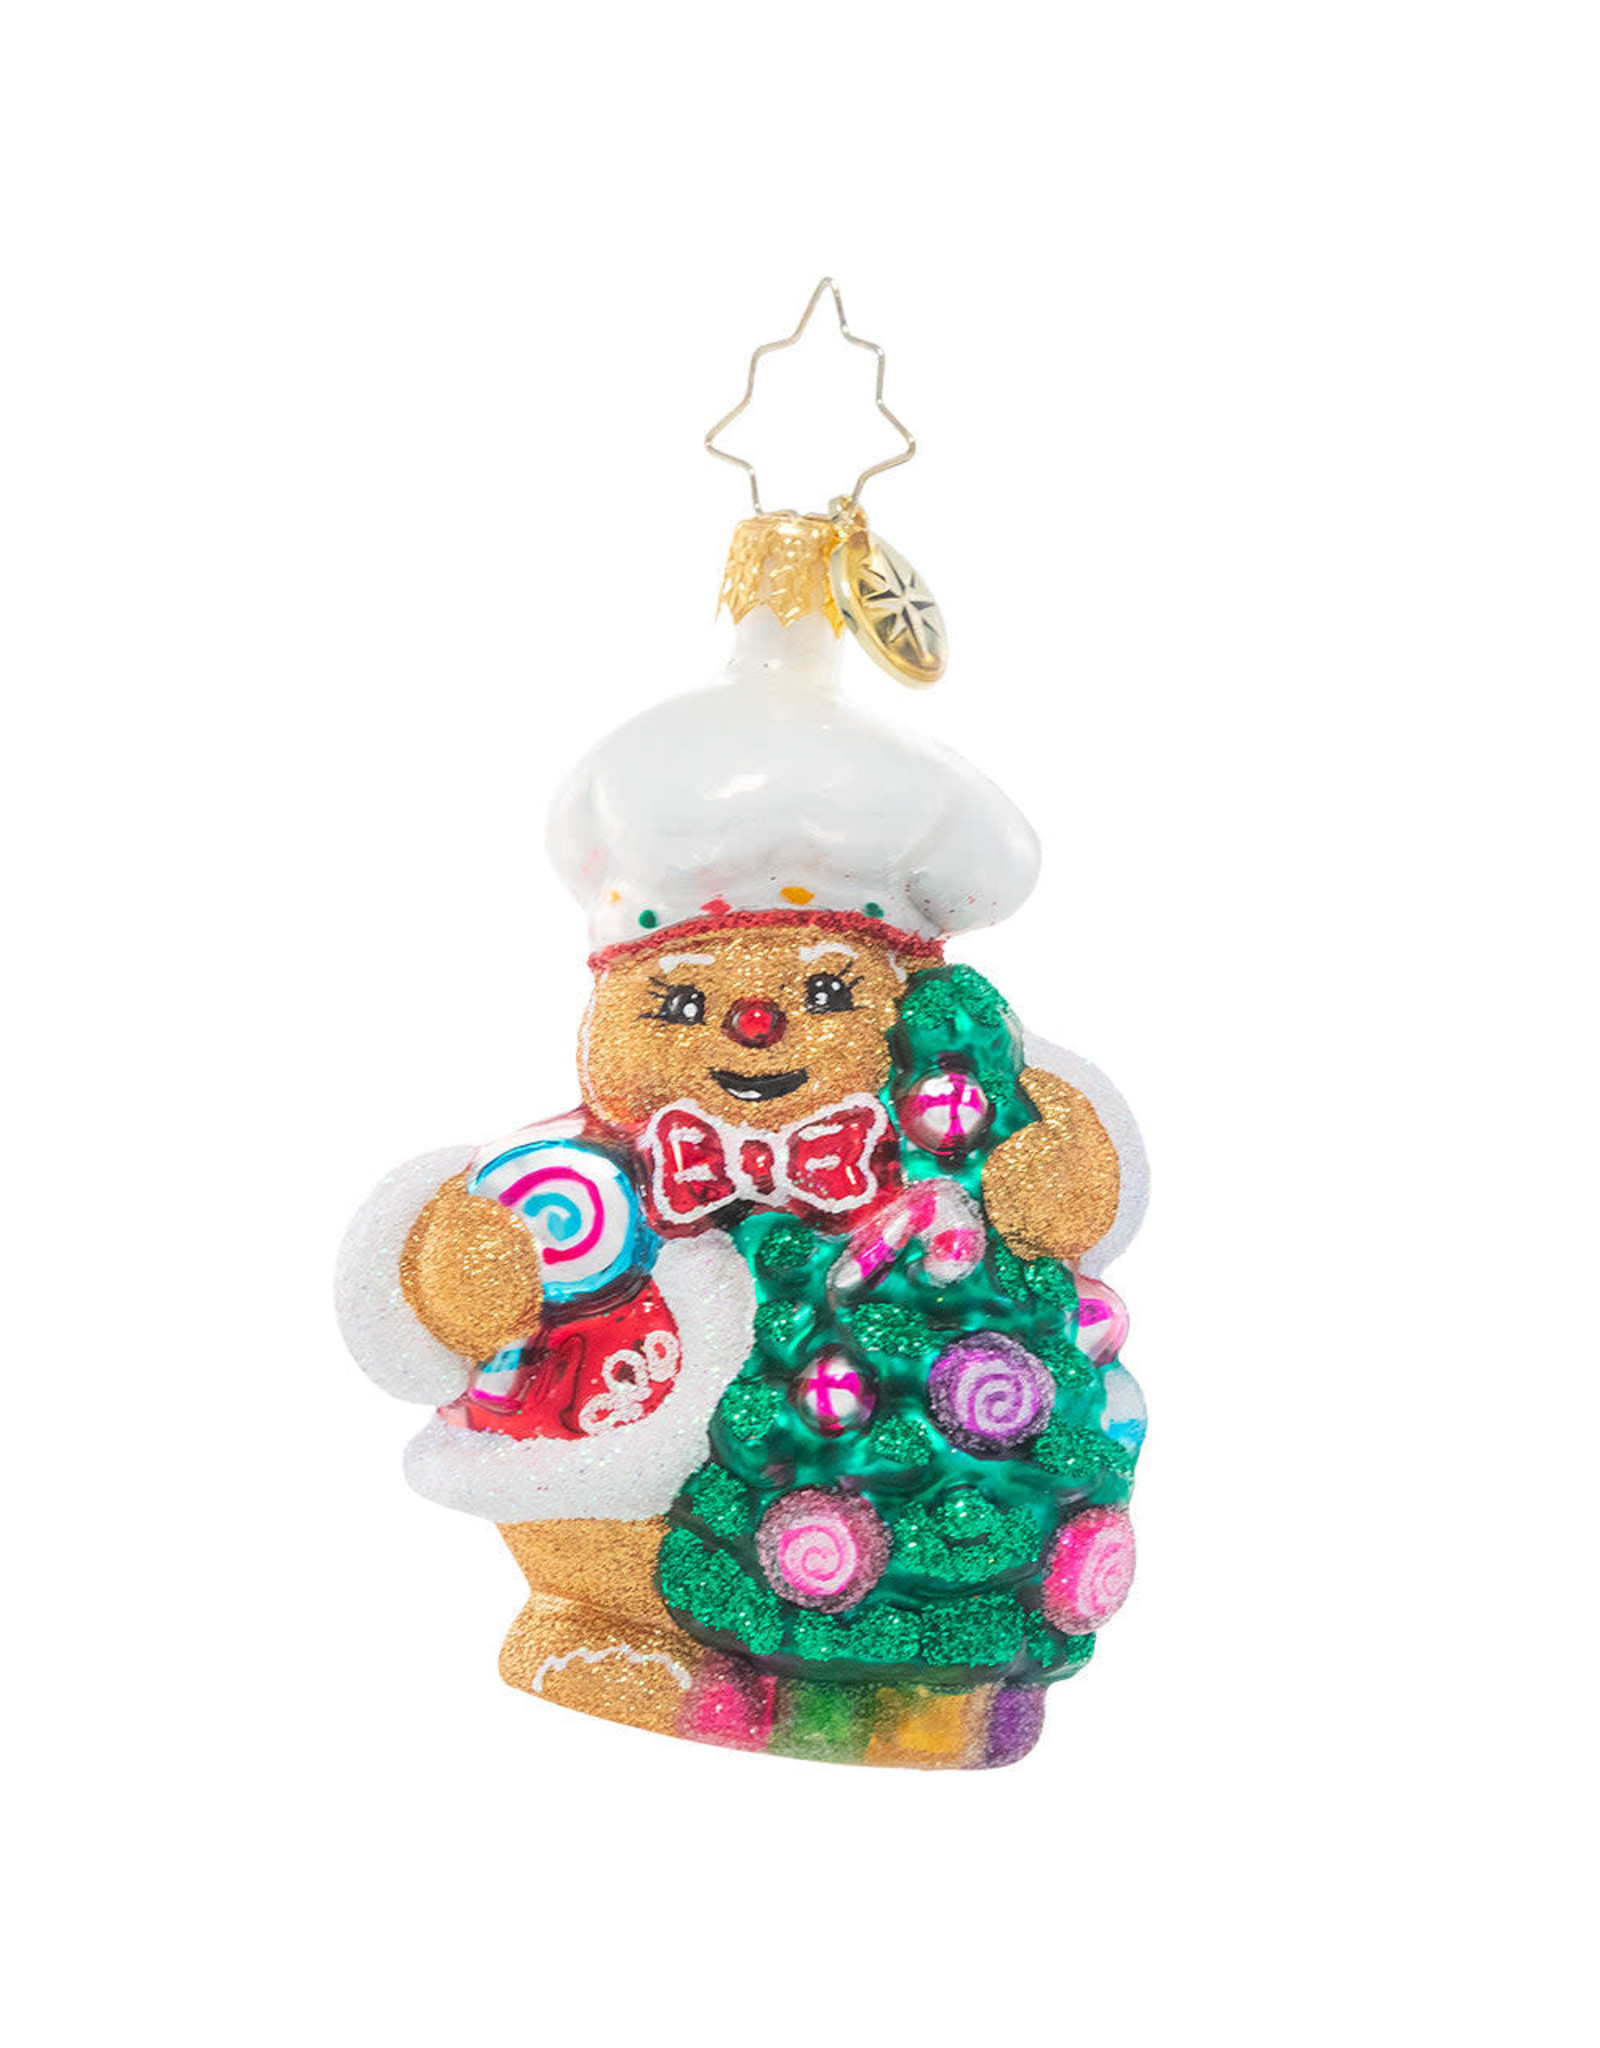 Christopher Radko Edible Evergreen Dream Gem Gingerbread Man Ornament